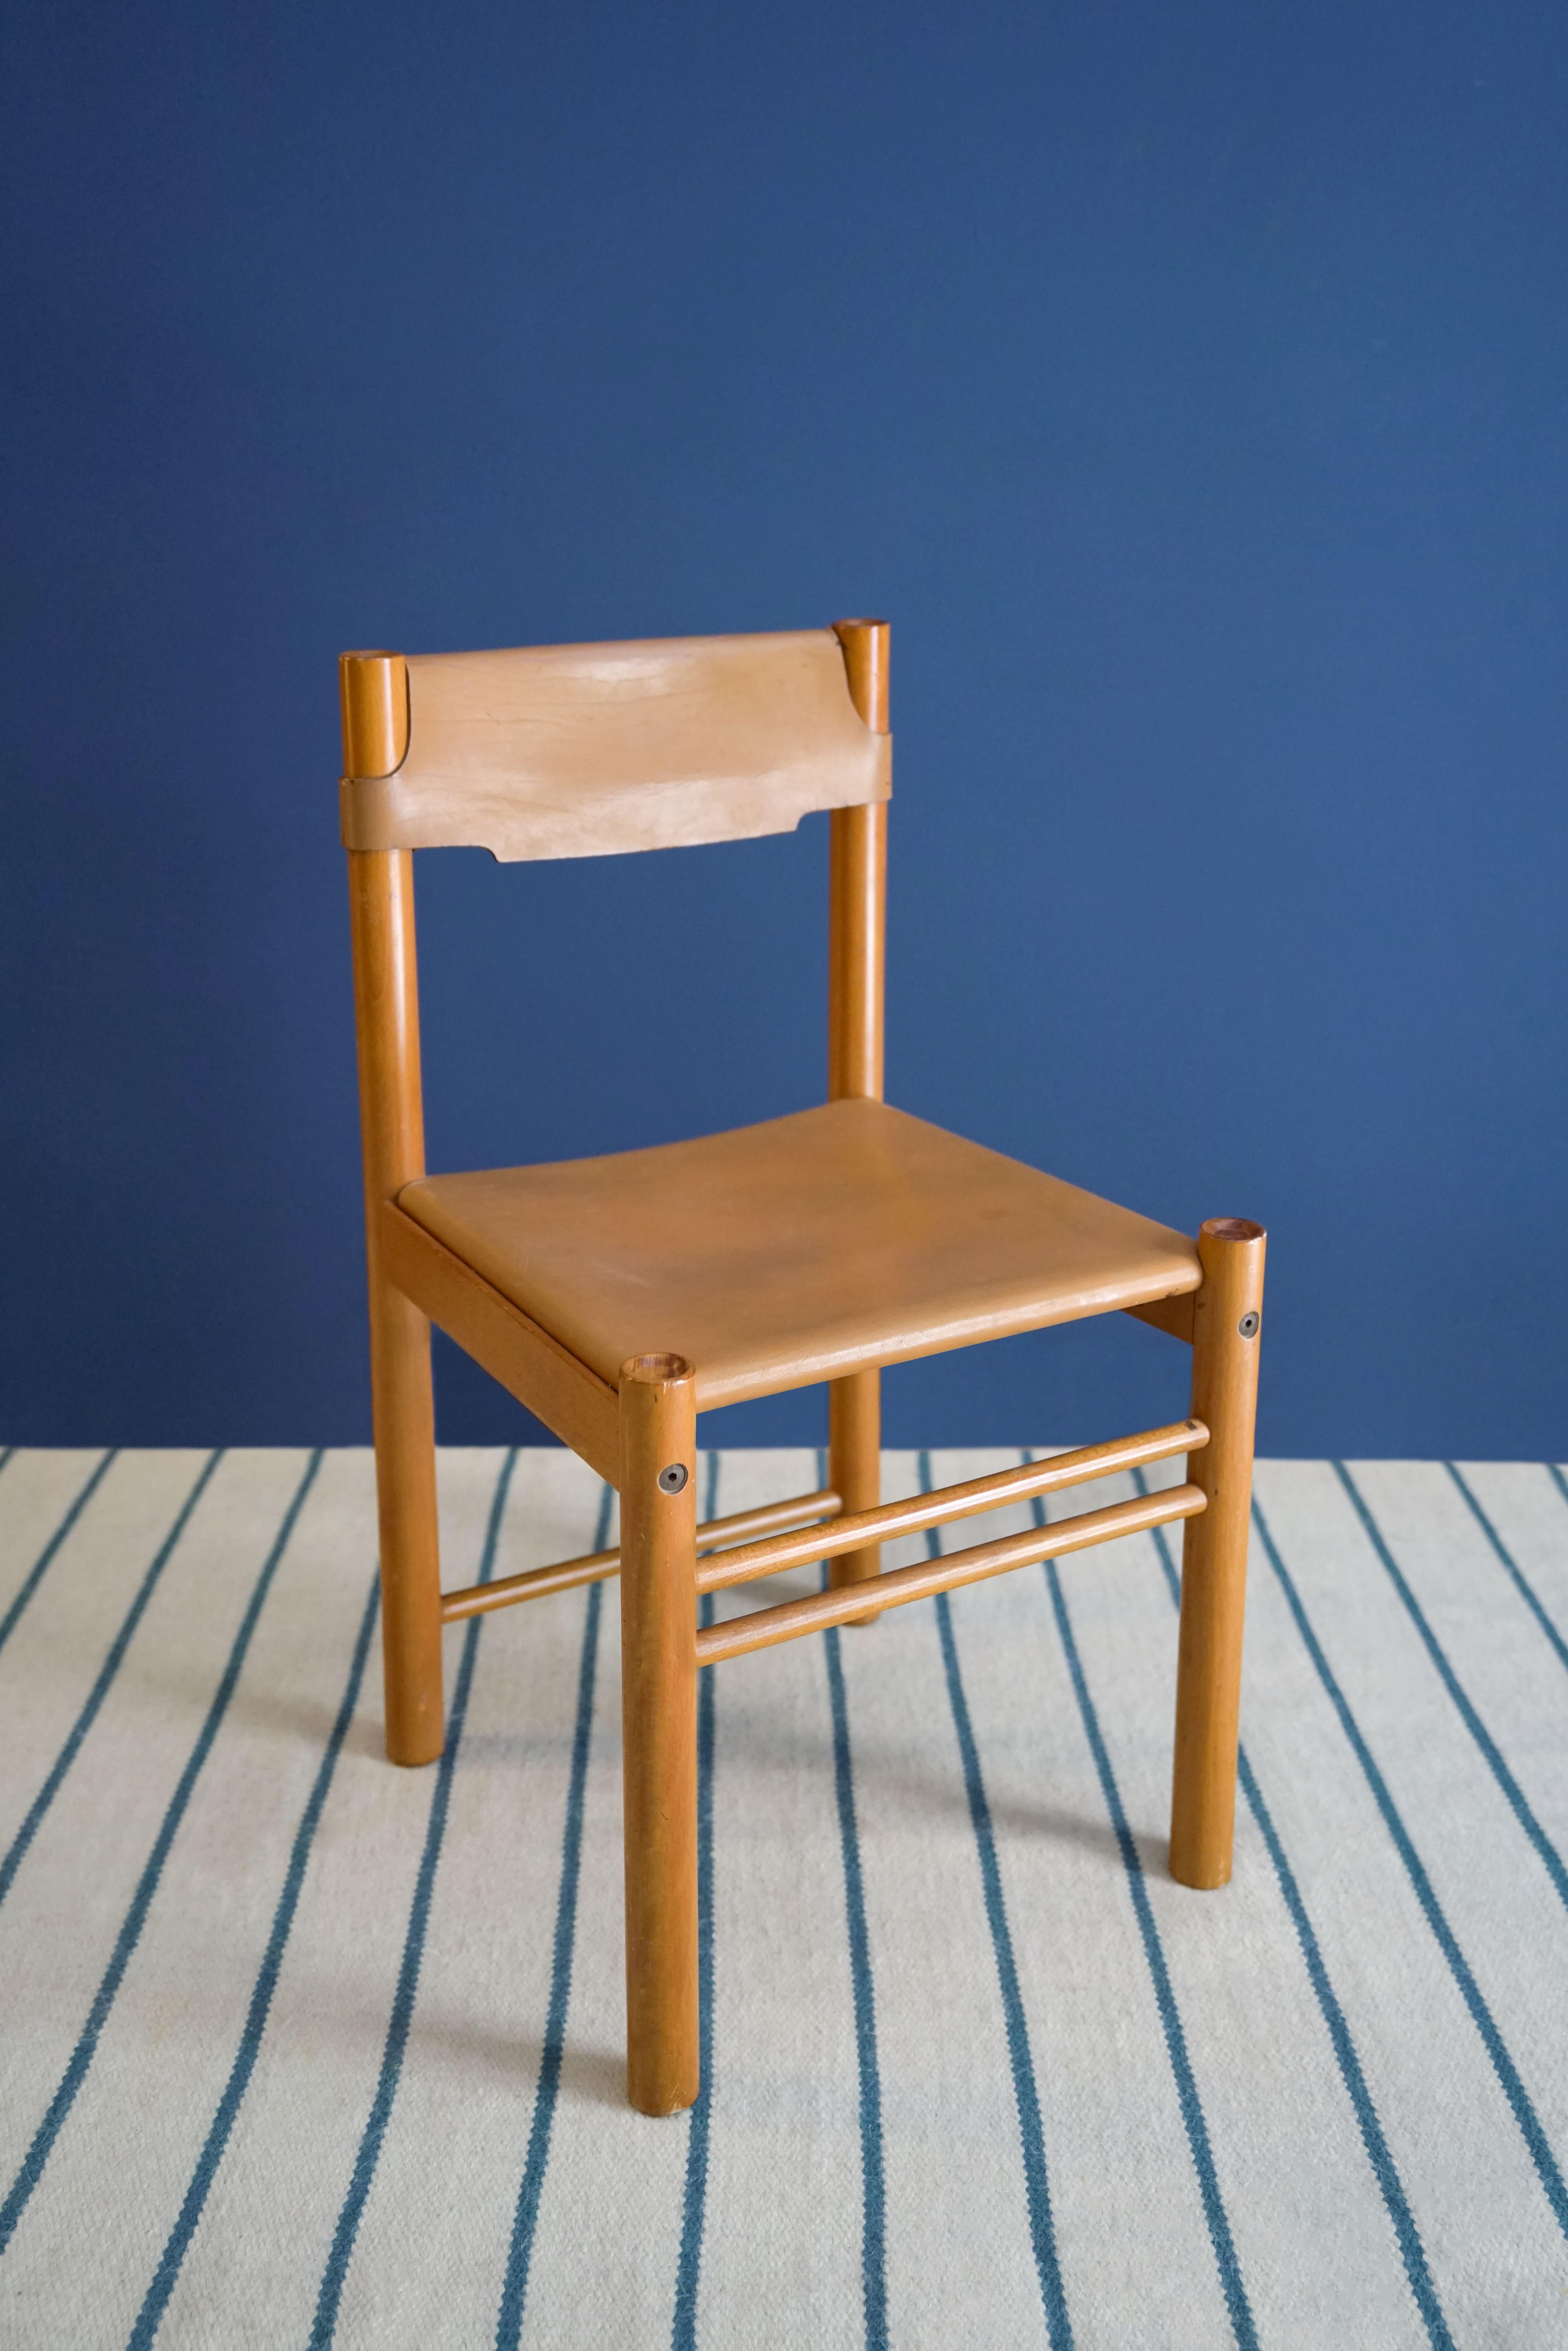 Mid-Century Modern Safari Chairs by Ibisco Sedie